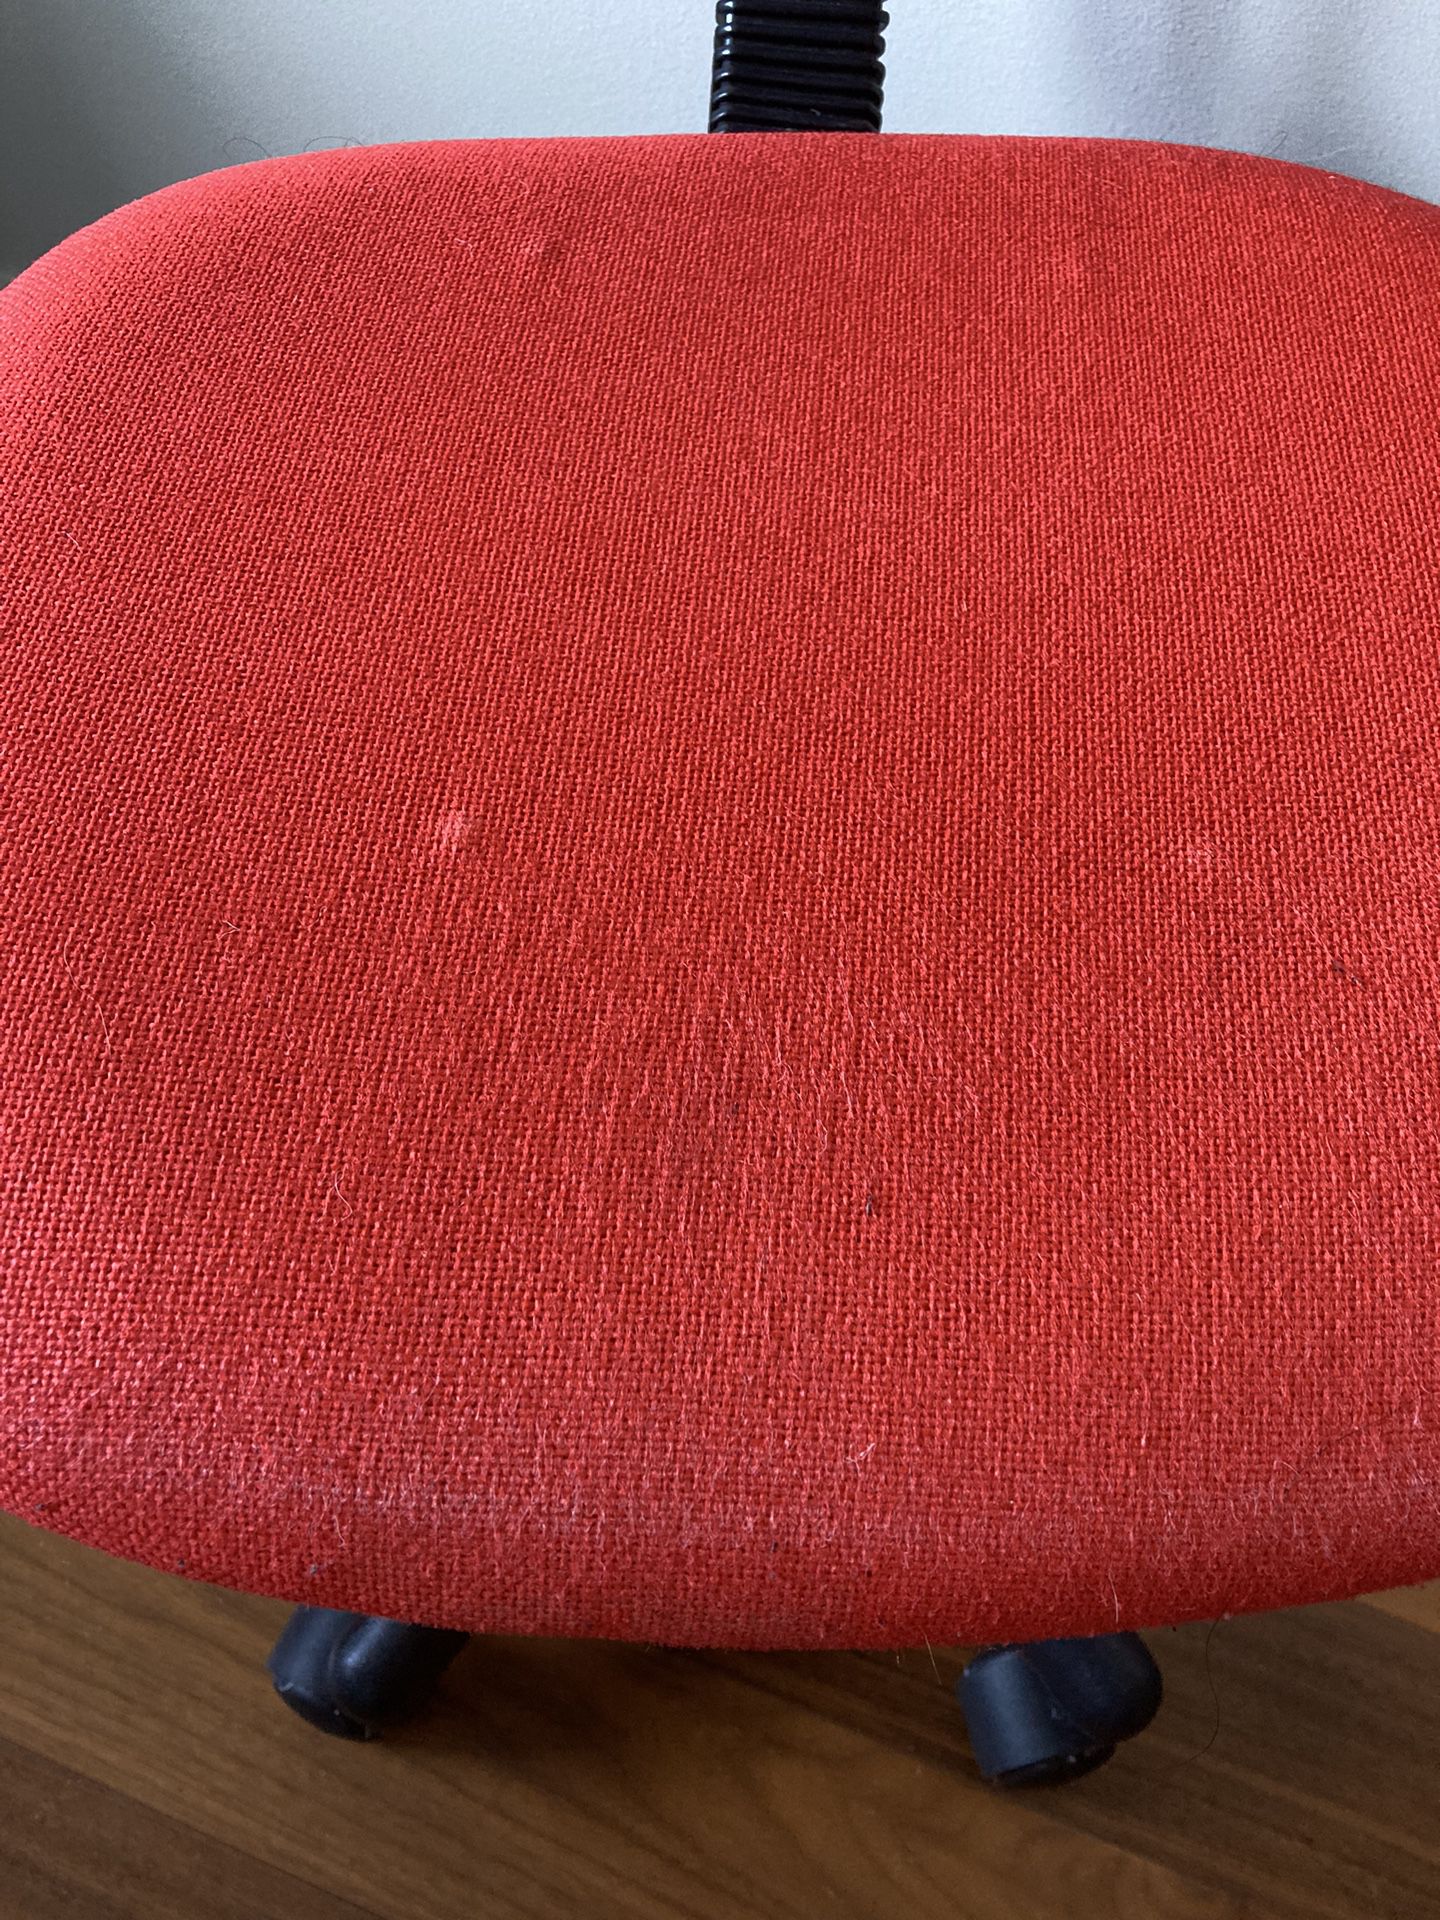 Adjustable Red Desk Chair